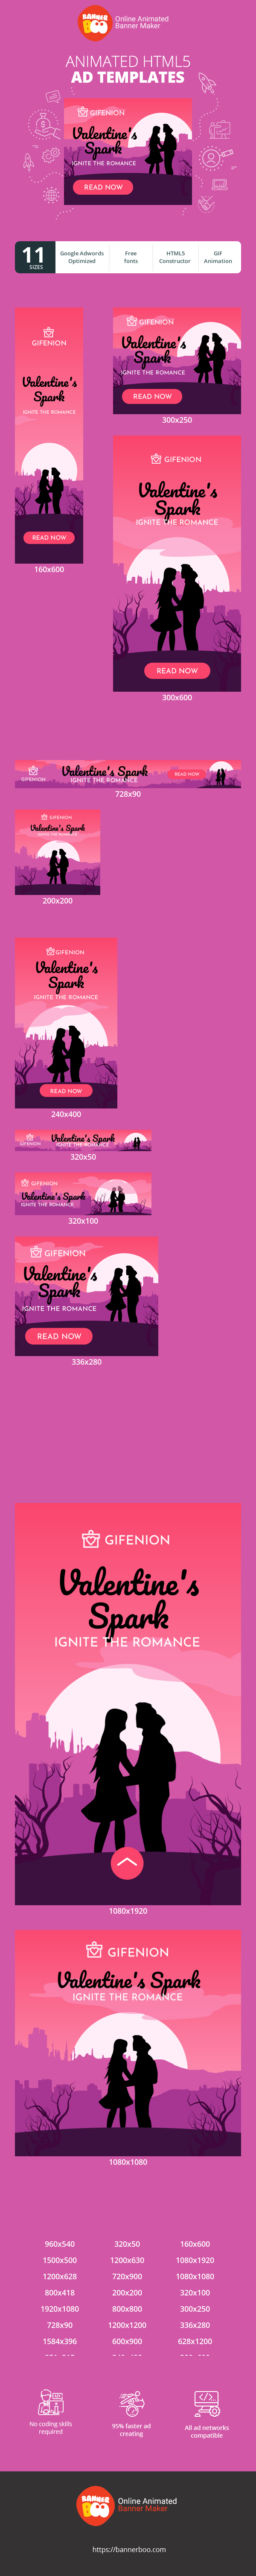 Banner ad template — Valentine's Spark Ignite The Romance — Valentine's Day